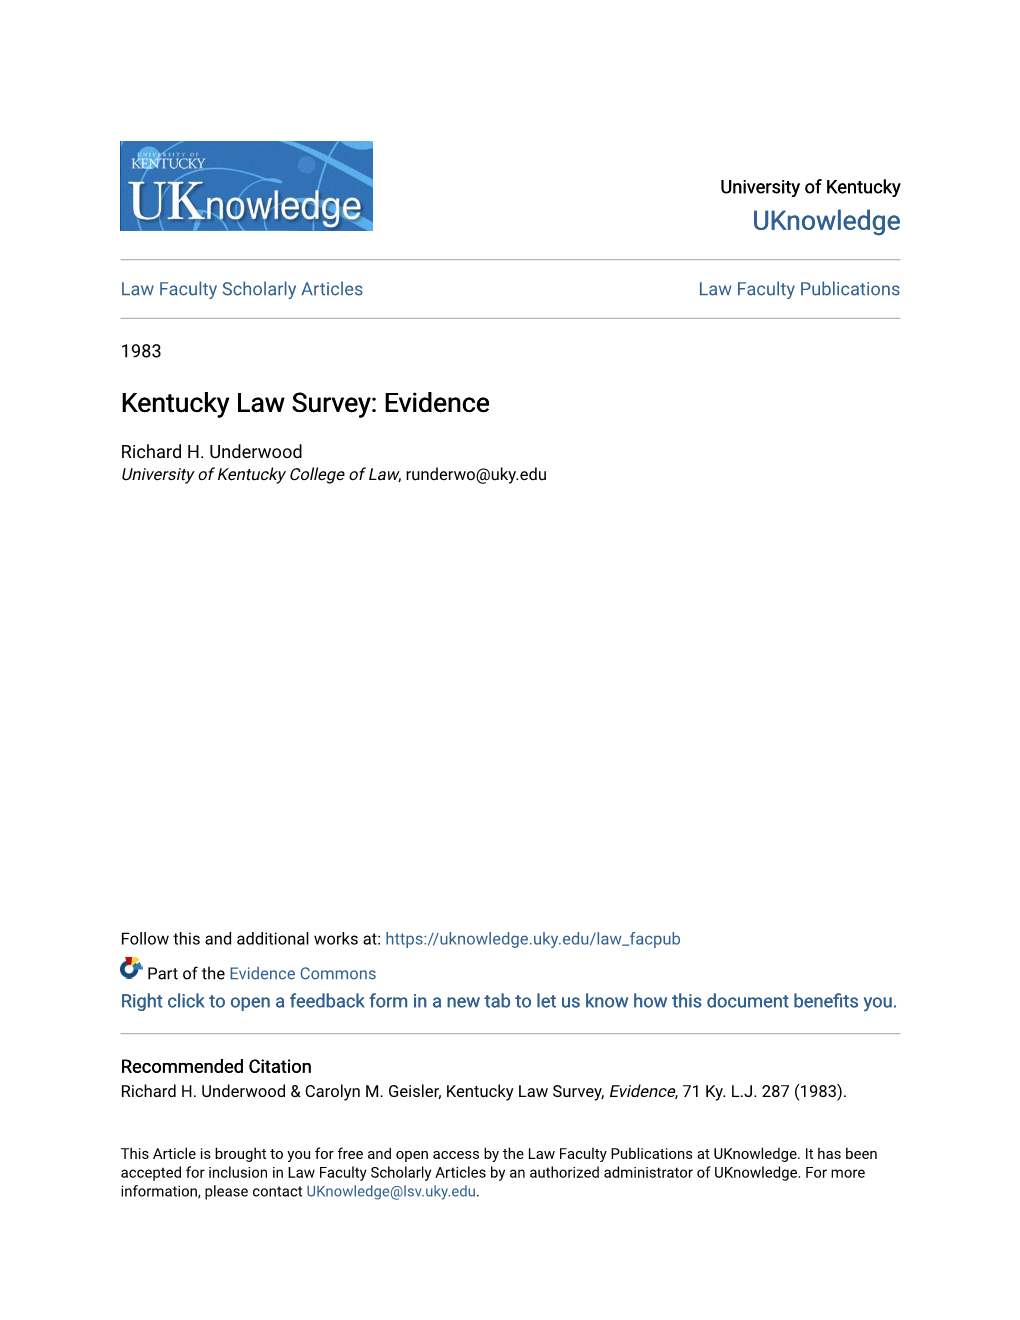 Kentucky Law Survey: Evidence